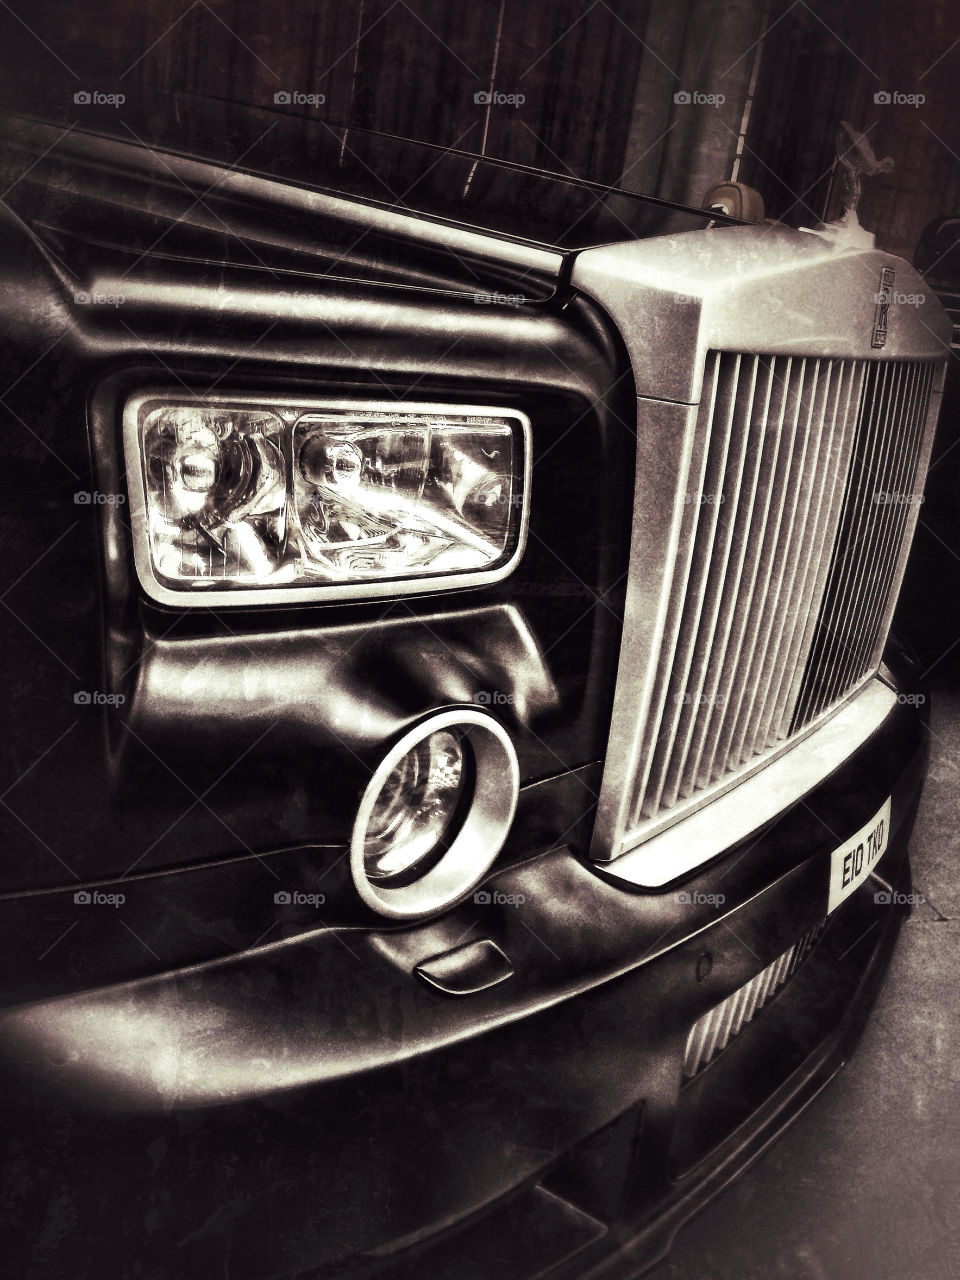 Millionaires rolls Royce phantom drop top, photography by MrPerfection